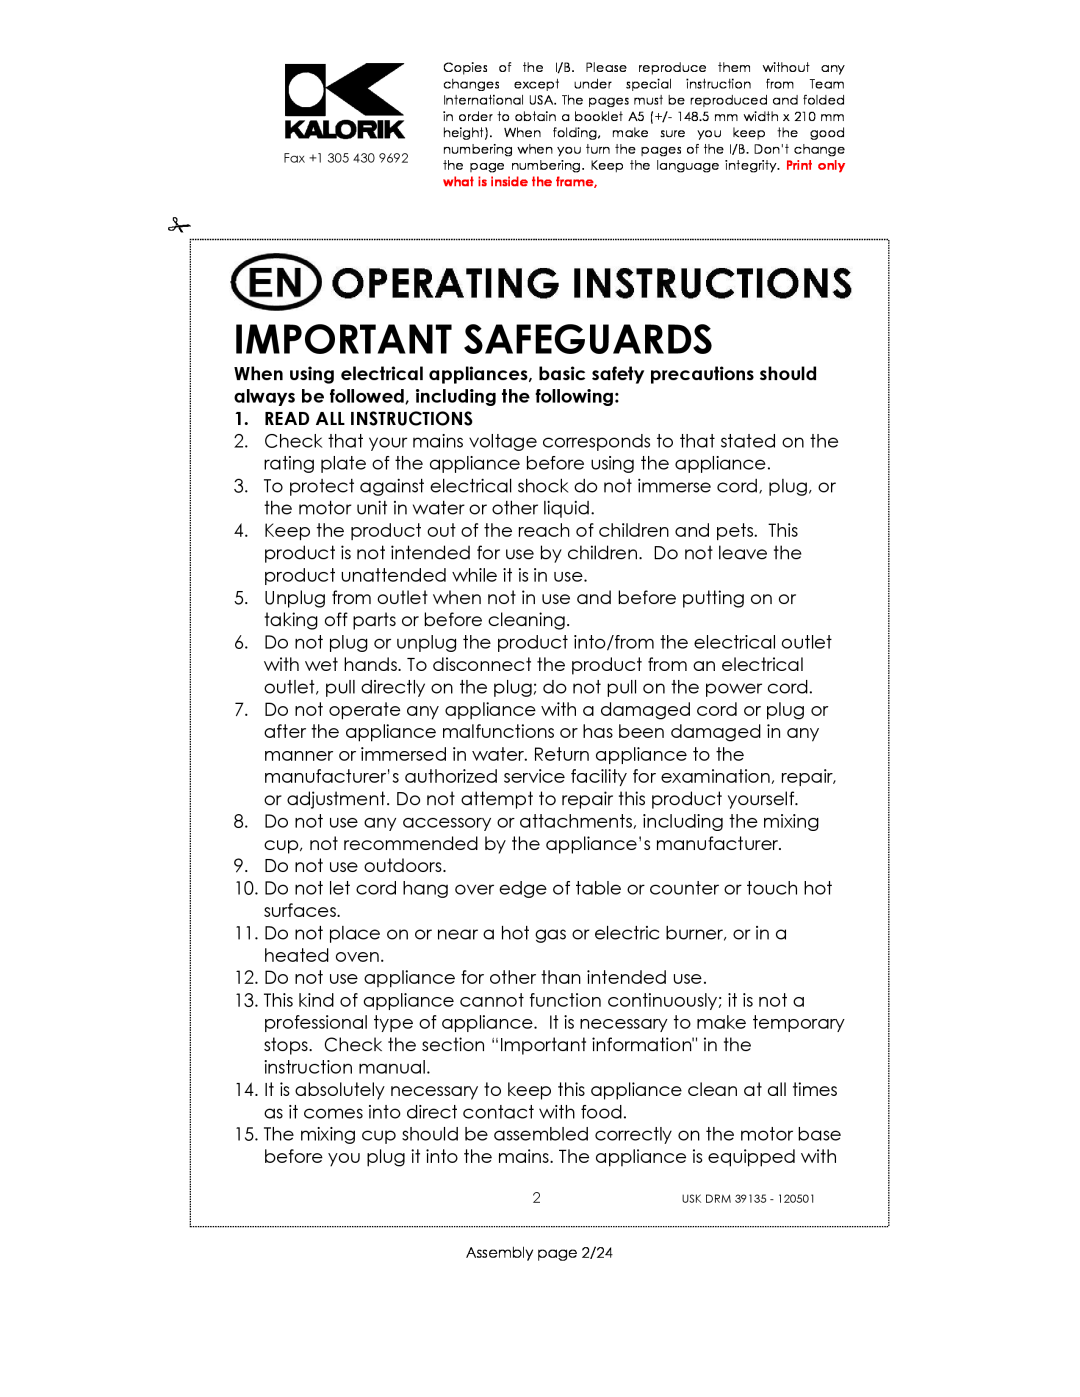 Kalorik USK DRM 39135 manual Important Safeguards, Read All Instructions 